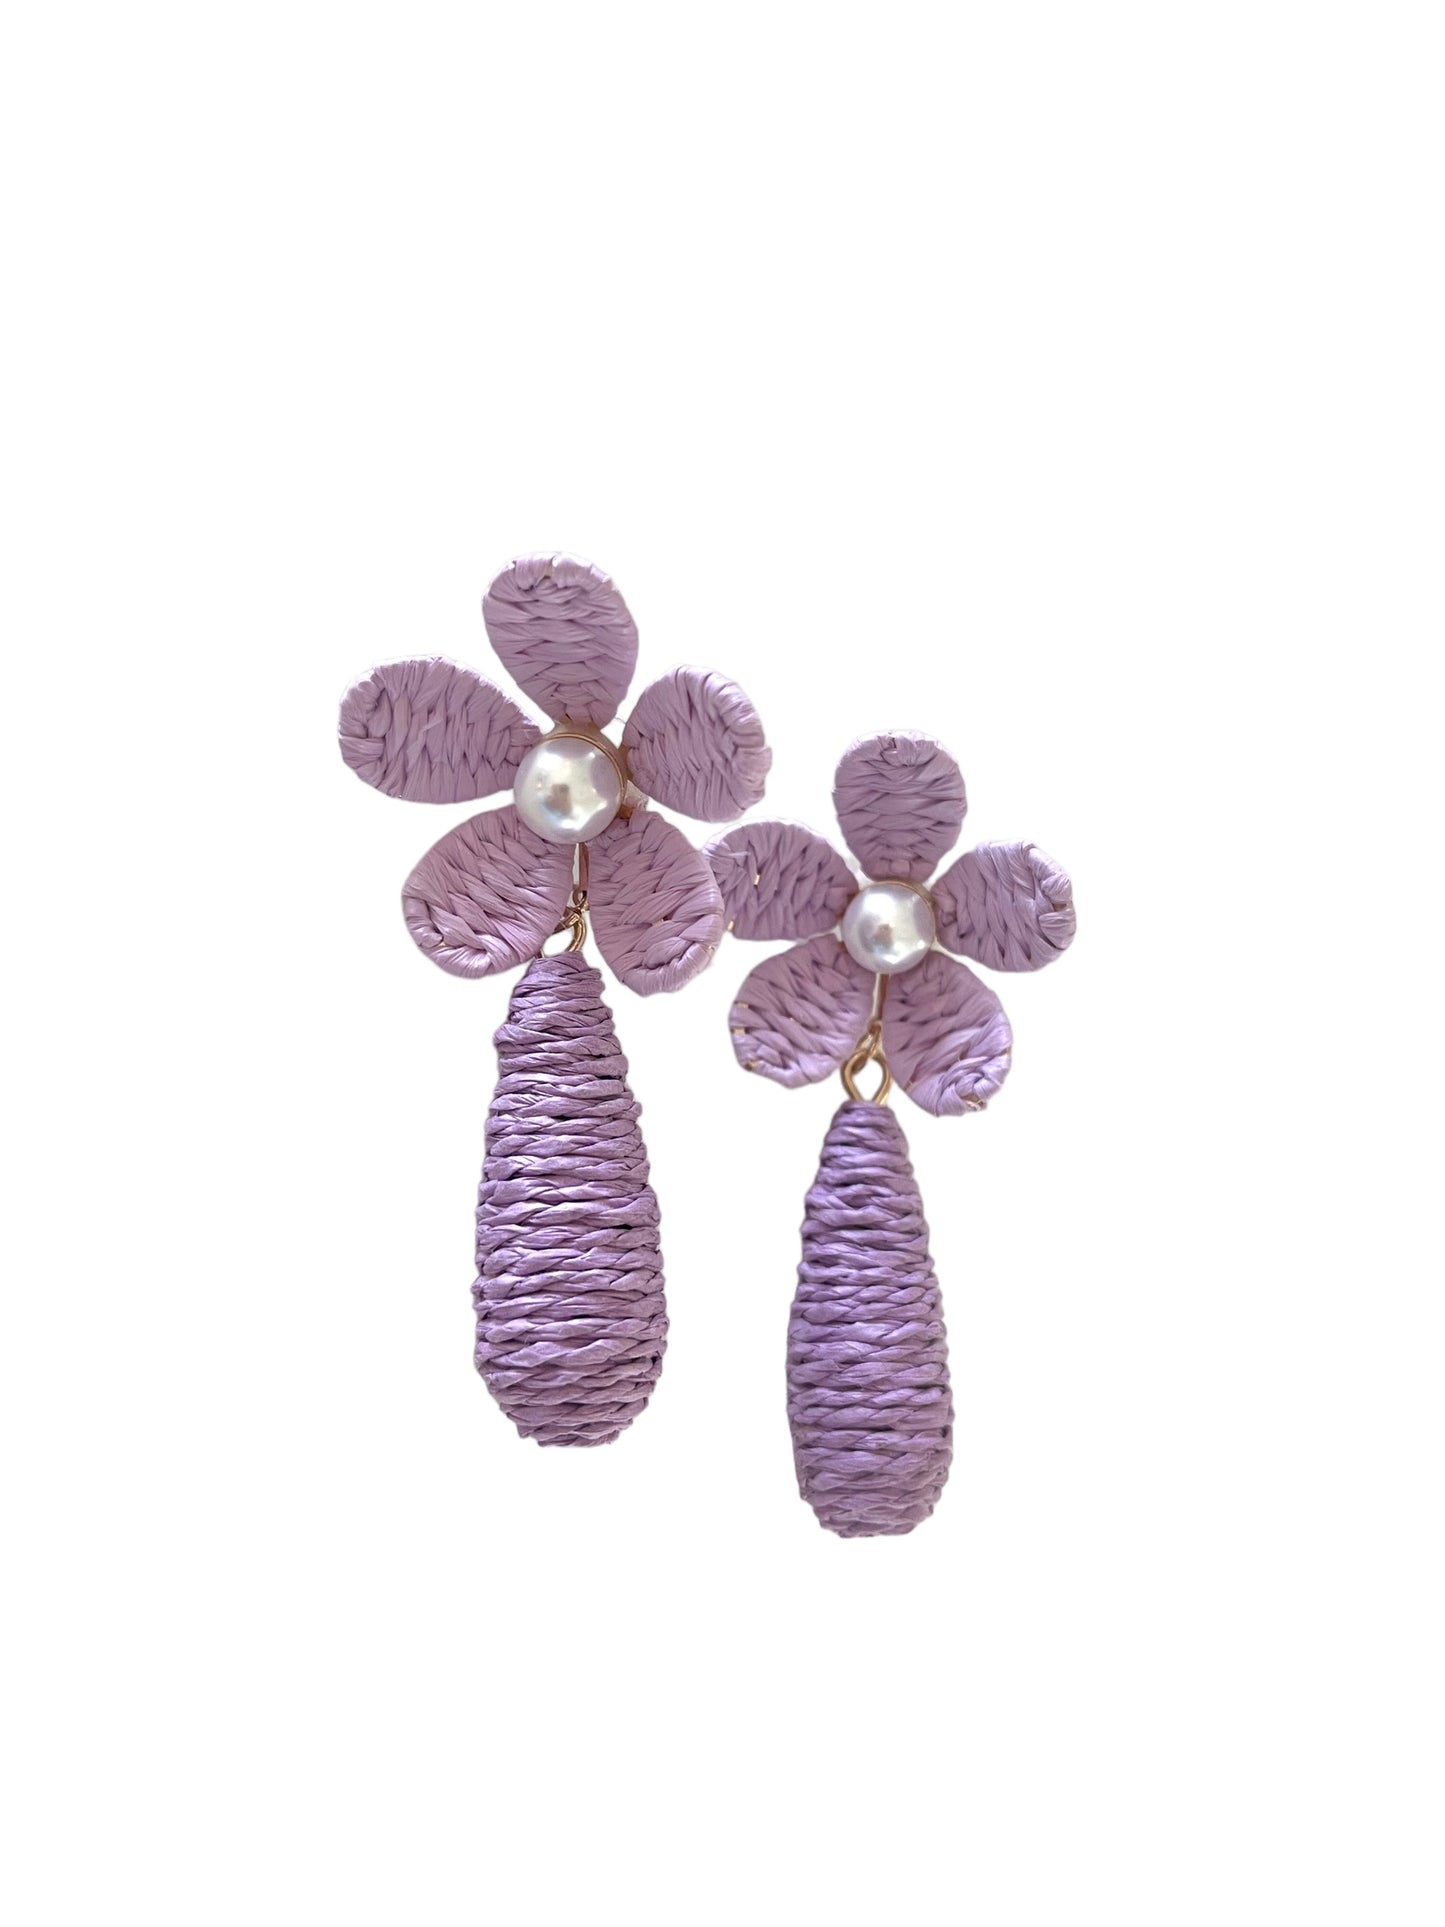 Braided Flower Earrings - Lavender